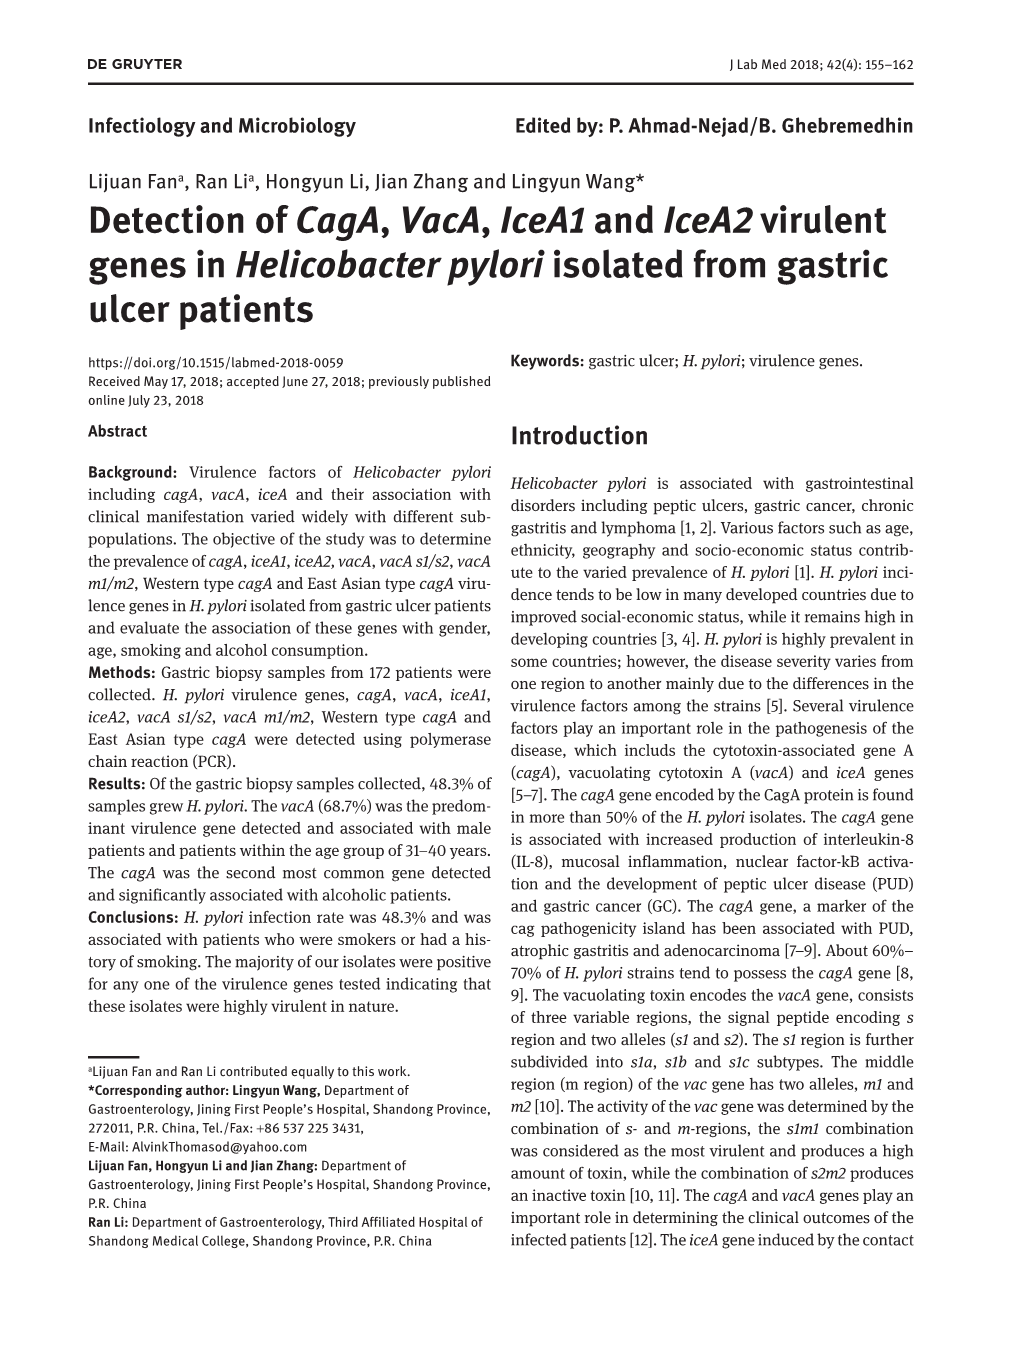 Detection of Caga, Vaca, Icea1 and Icea2 Virulent Genes In